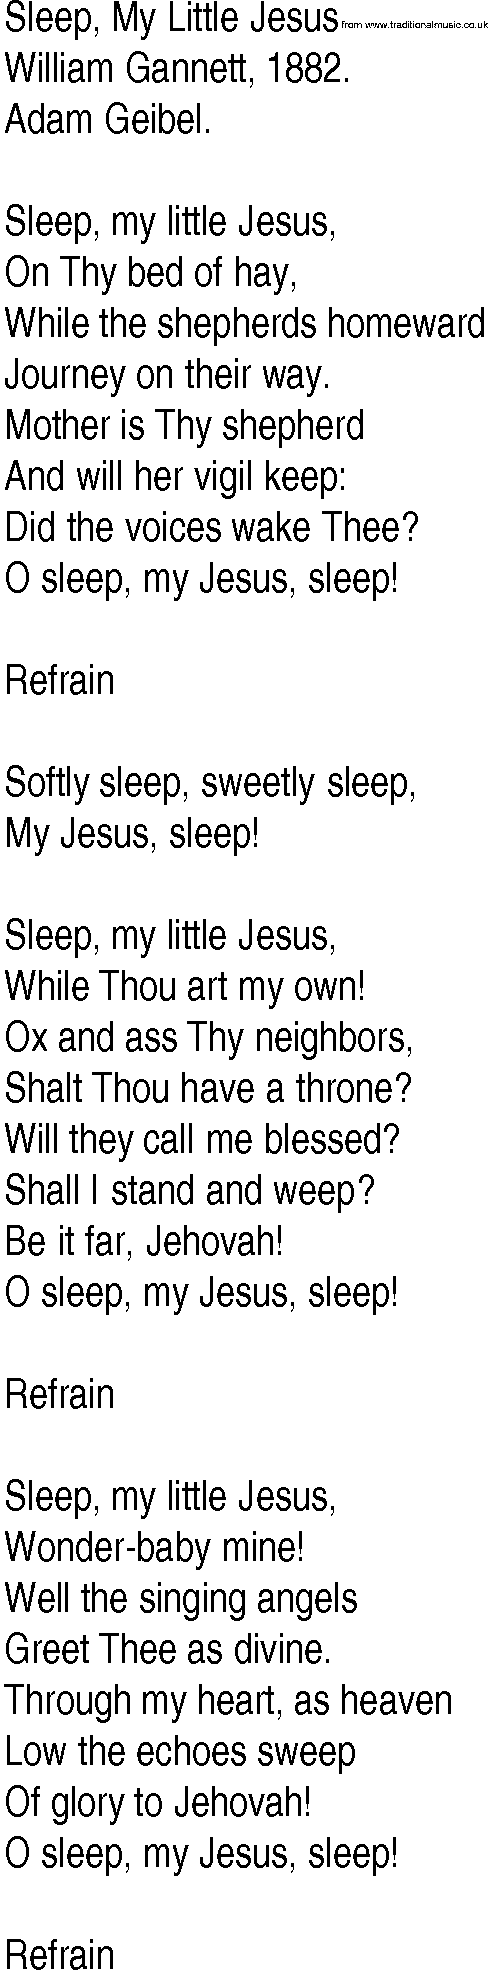 Hymn and Gospel Song: Sleep, My Little Jesus by William Gannett lyrics